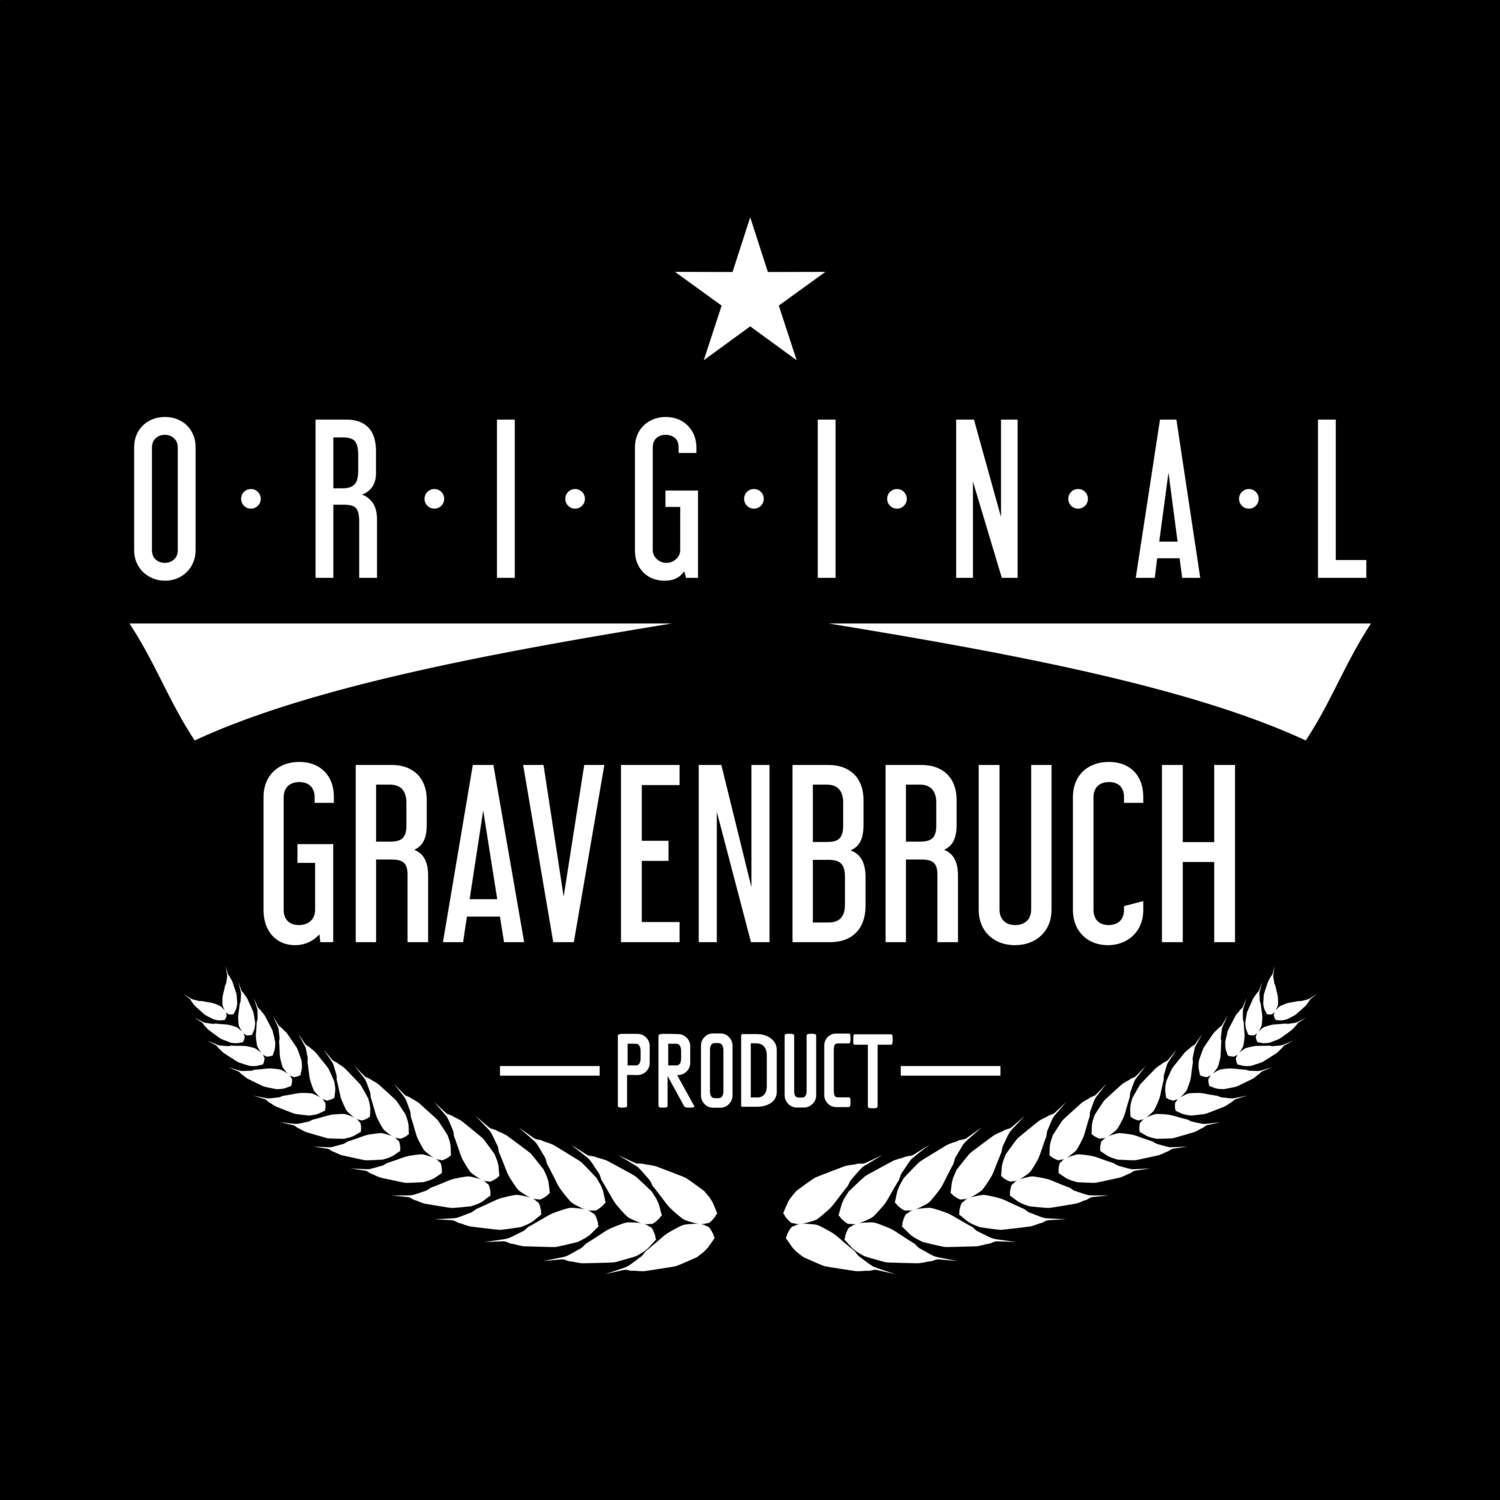 Gravenbruch T-Shirt »Original Product«